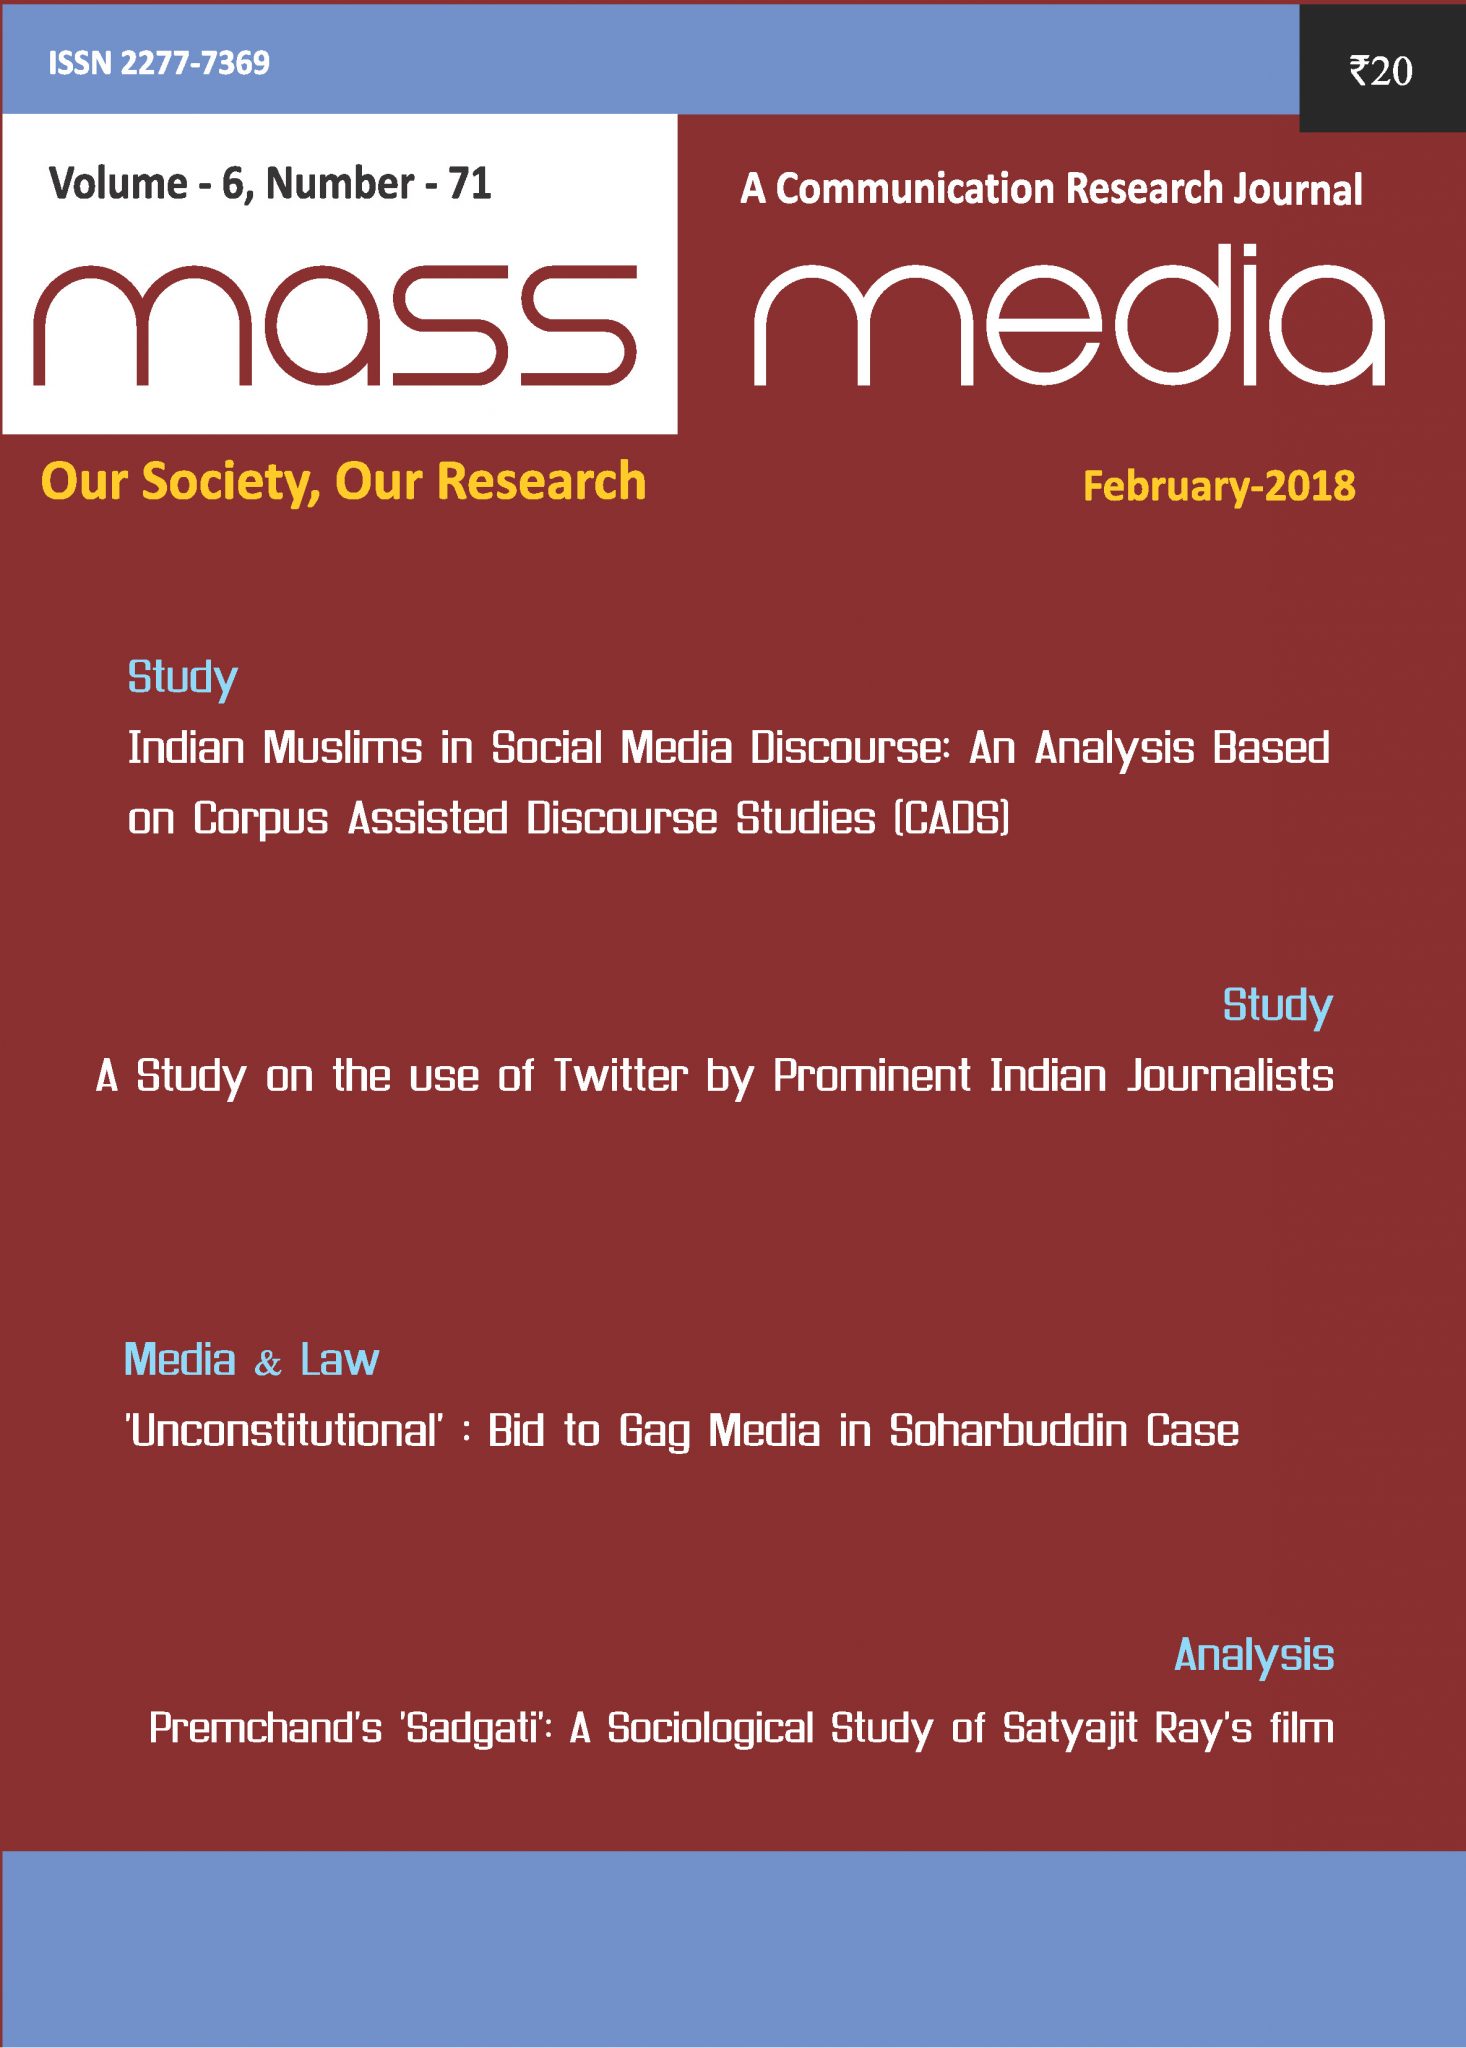 Mass Media (February 2018)